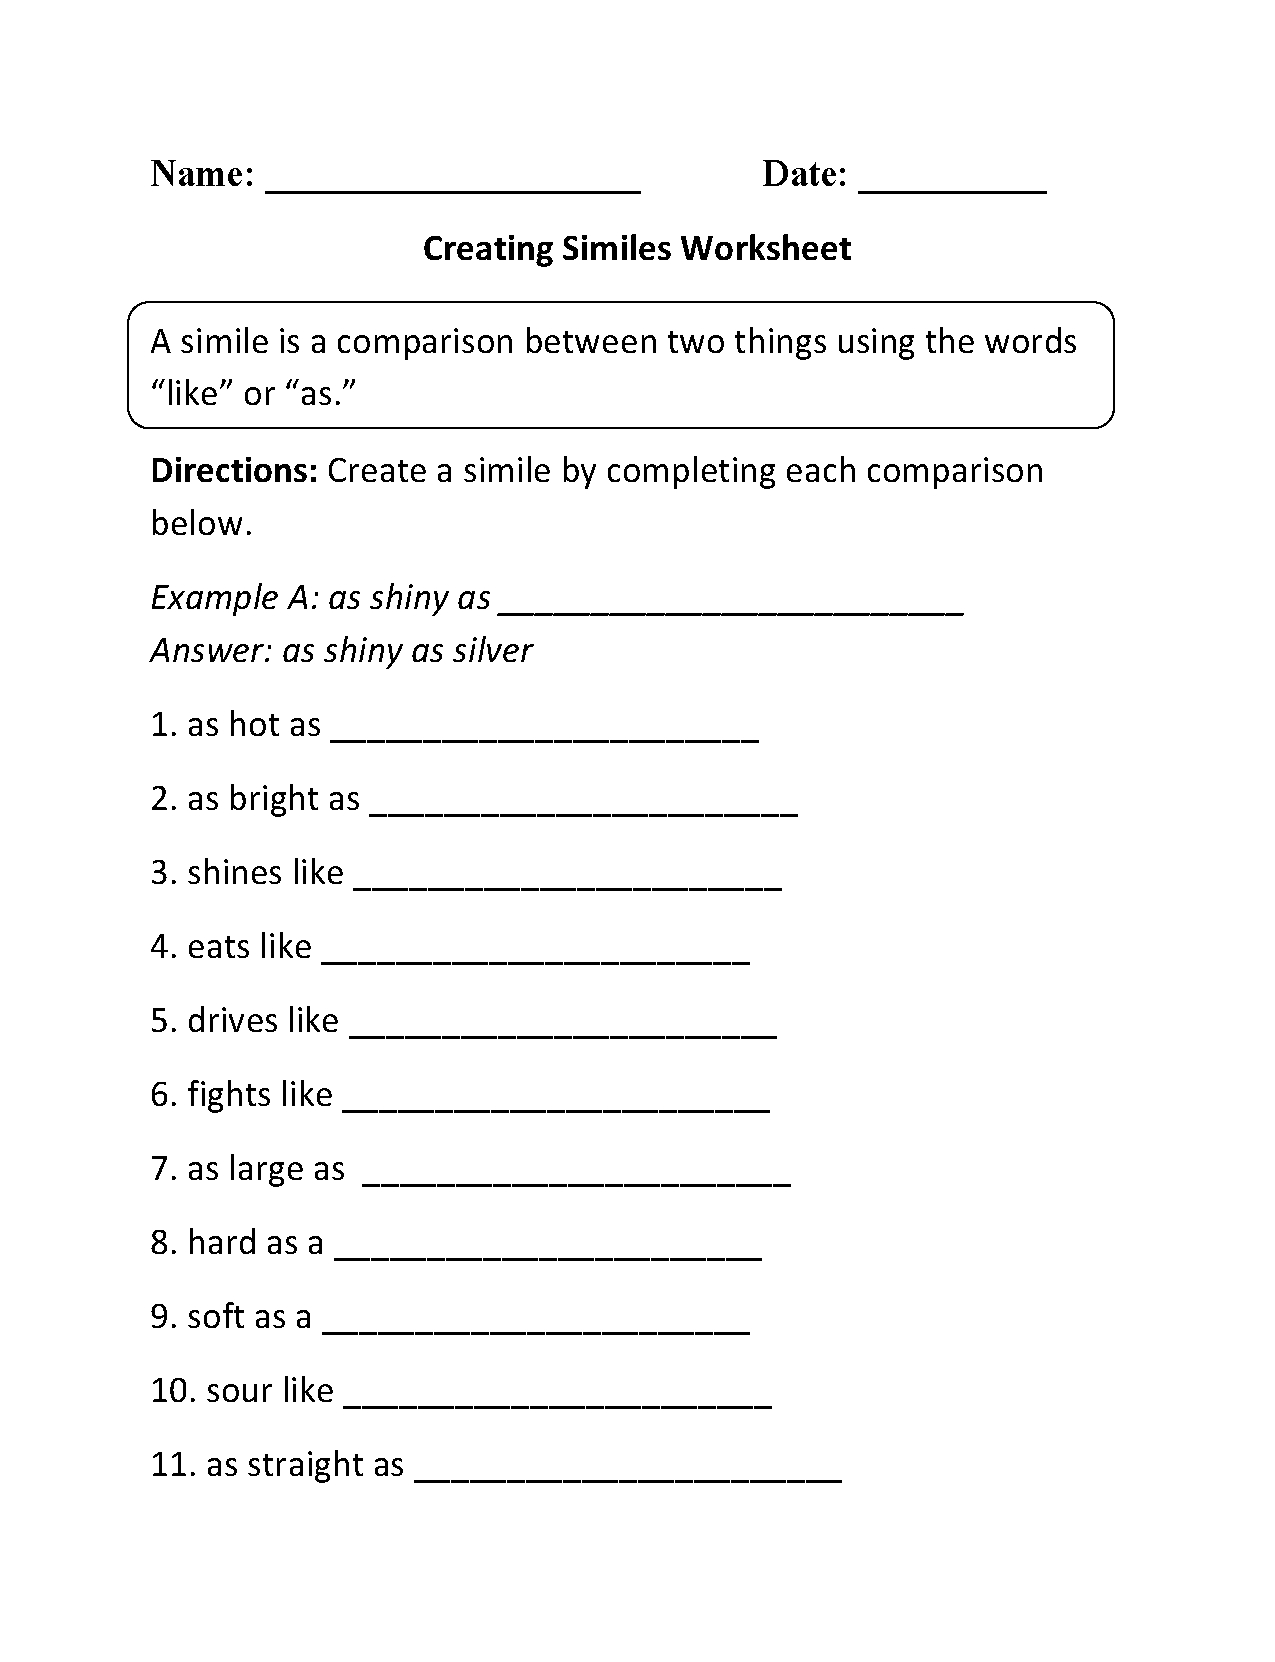 Creating Similes Worksheet | Simile Worksheet, Simile